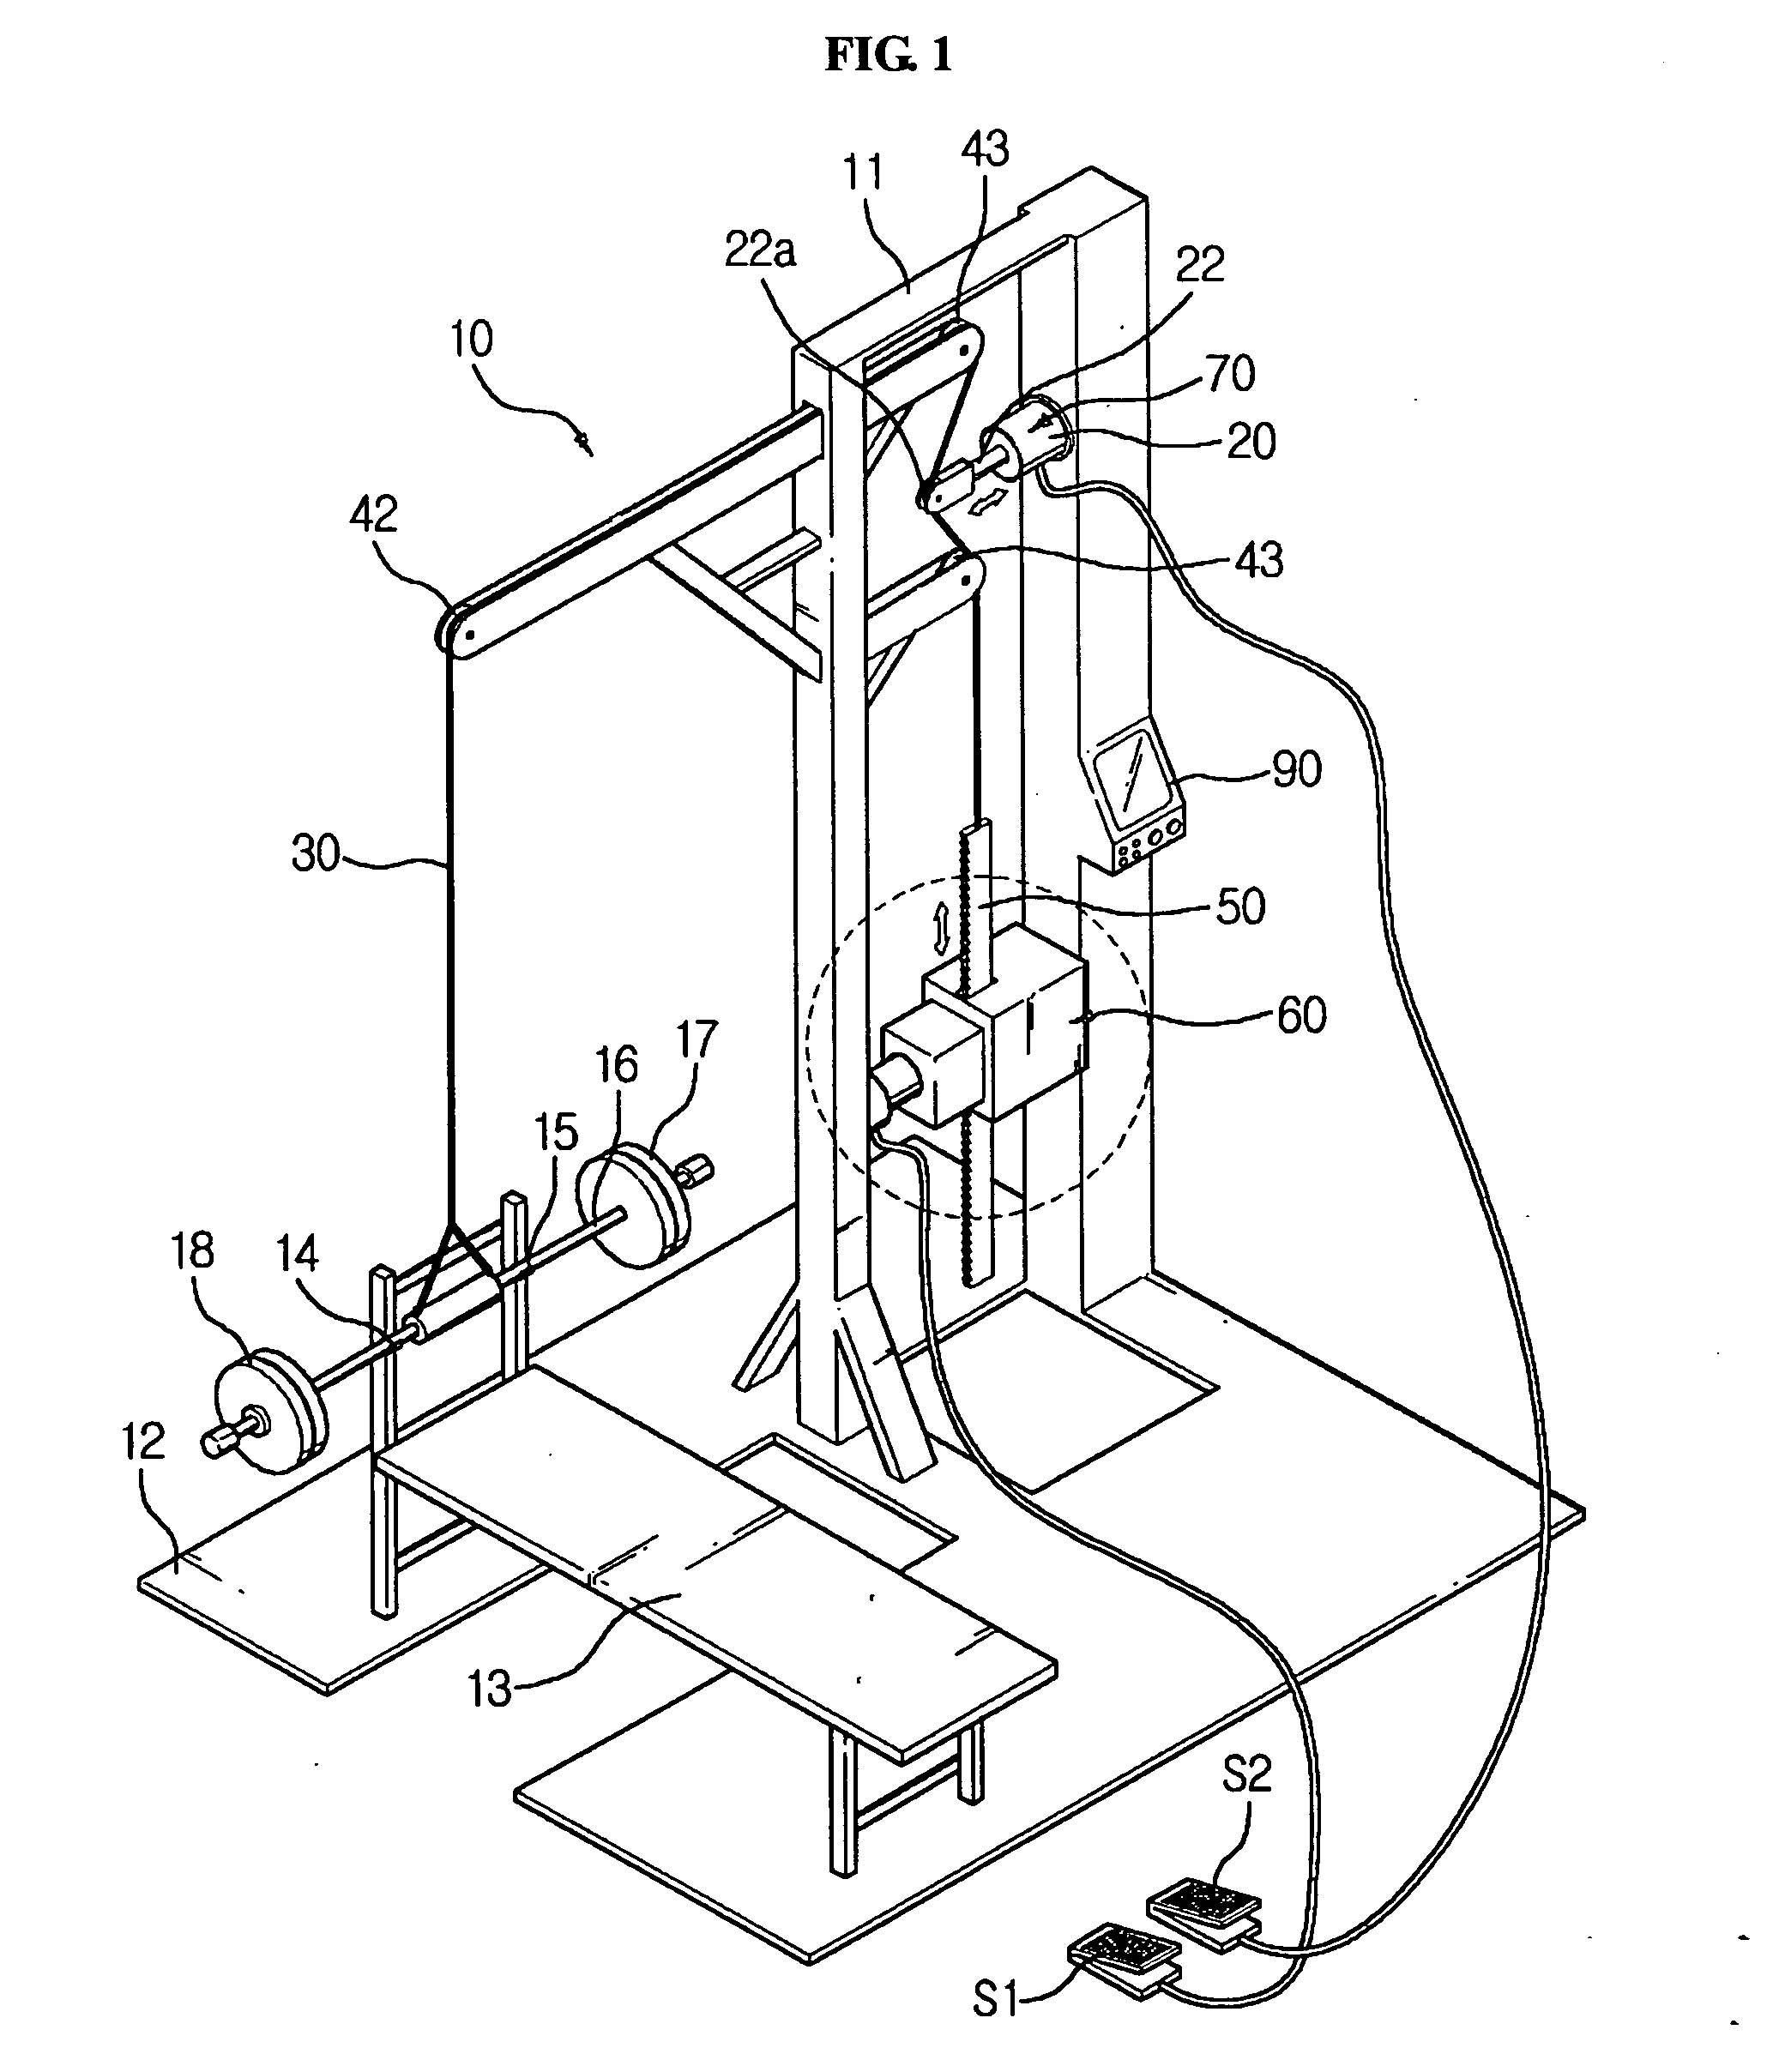 Bench press apparatus